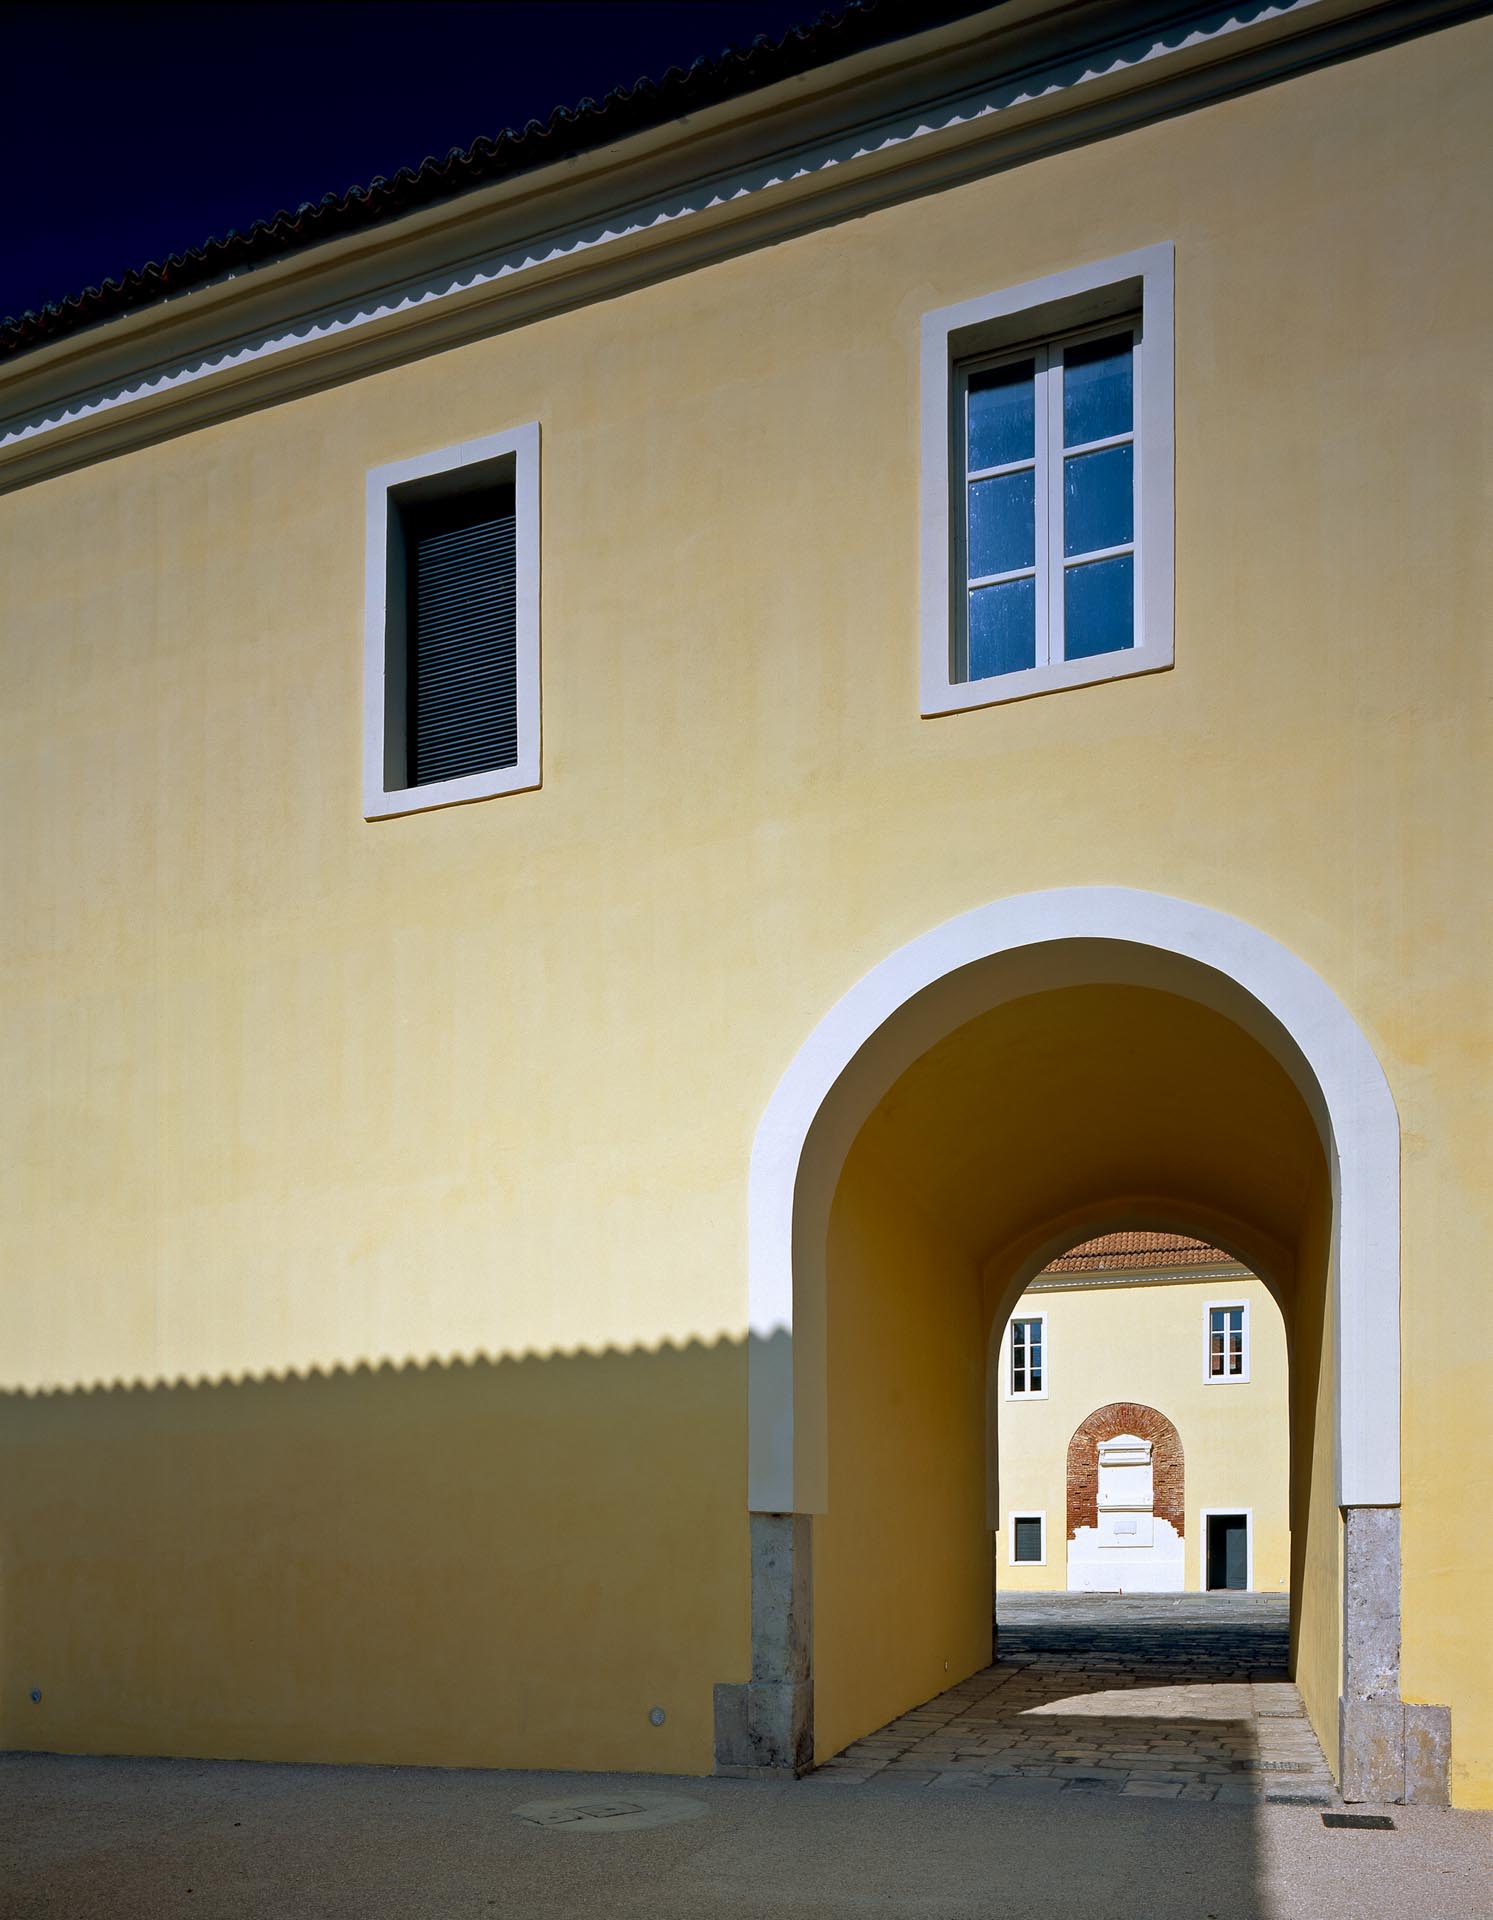  Corvino + Multari - Restauro del Quartiere Militare Borbonico, Casagiove, Caserta